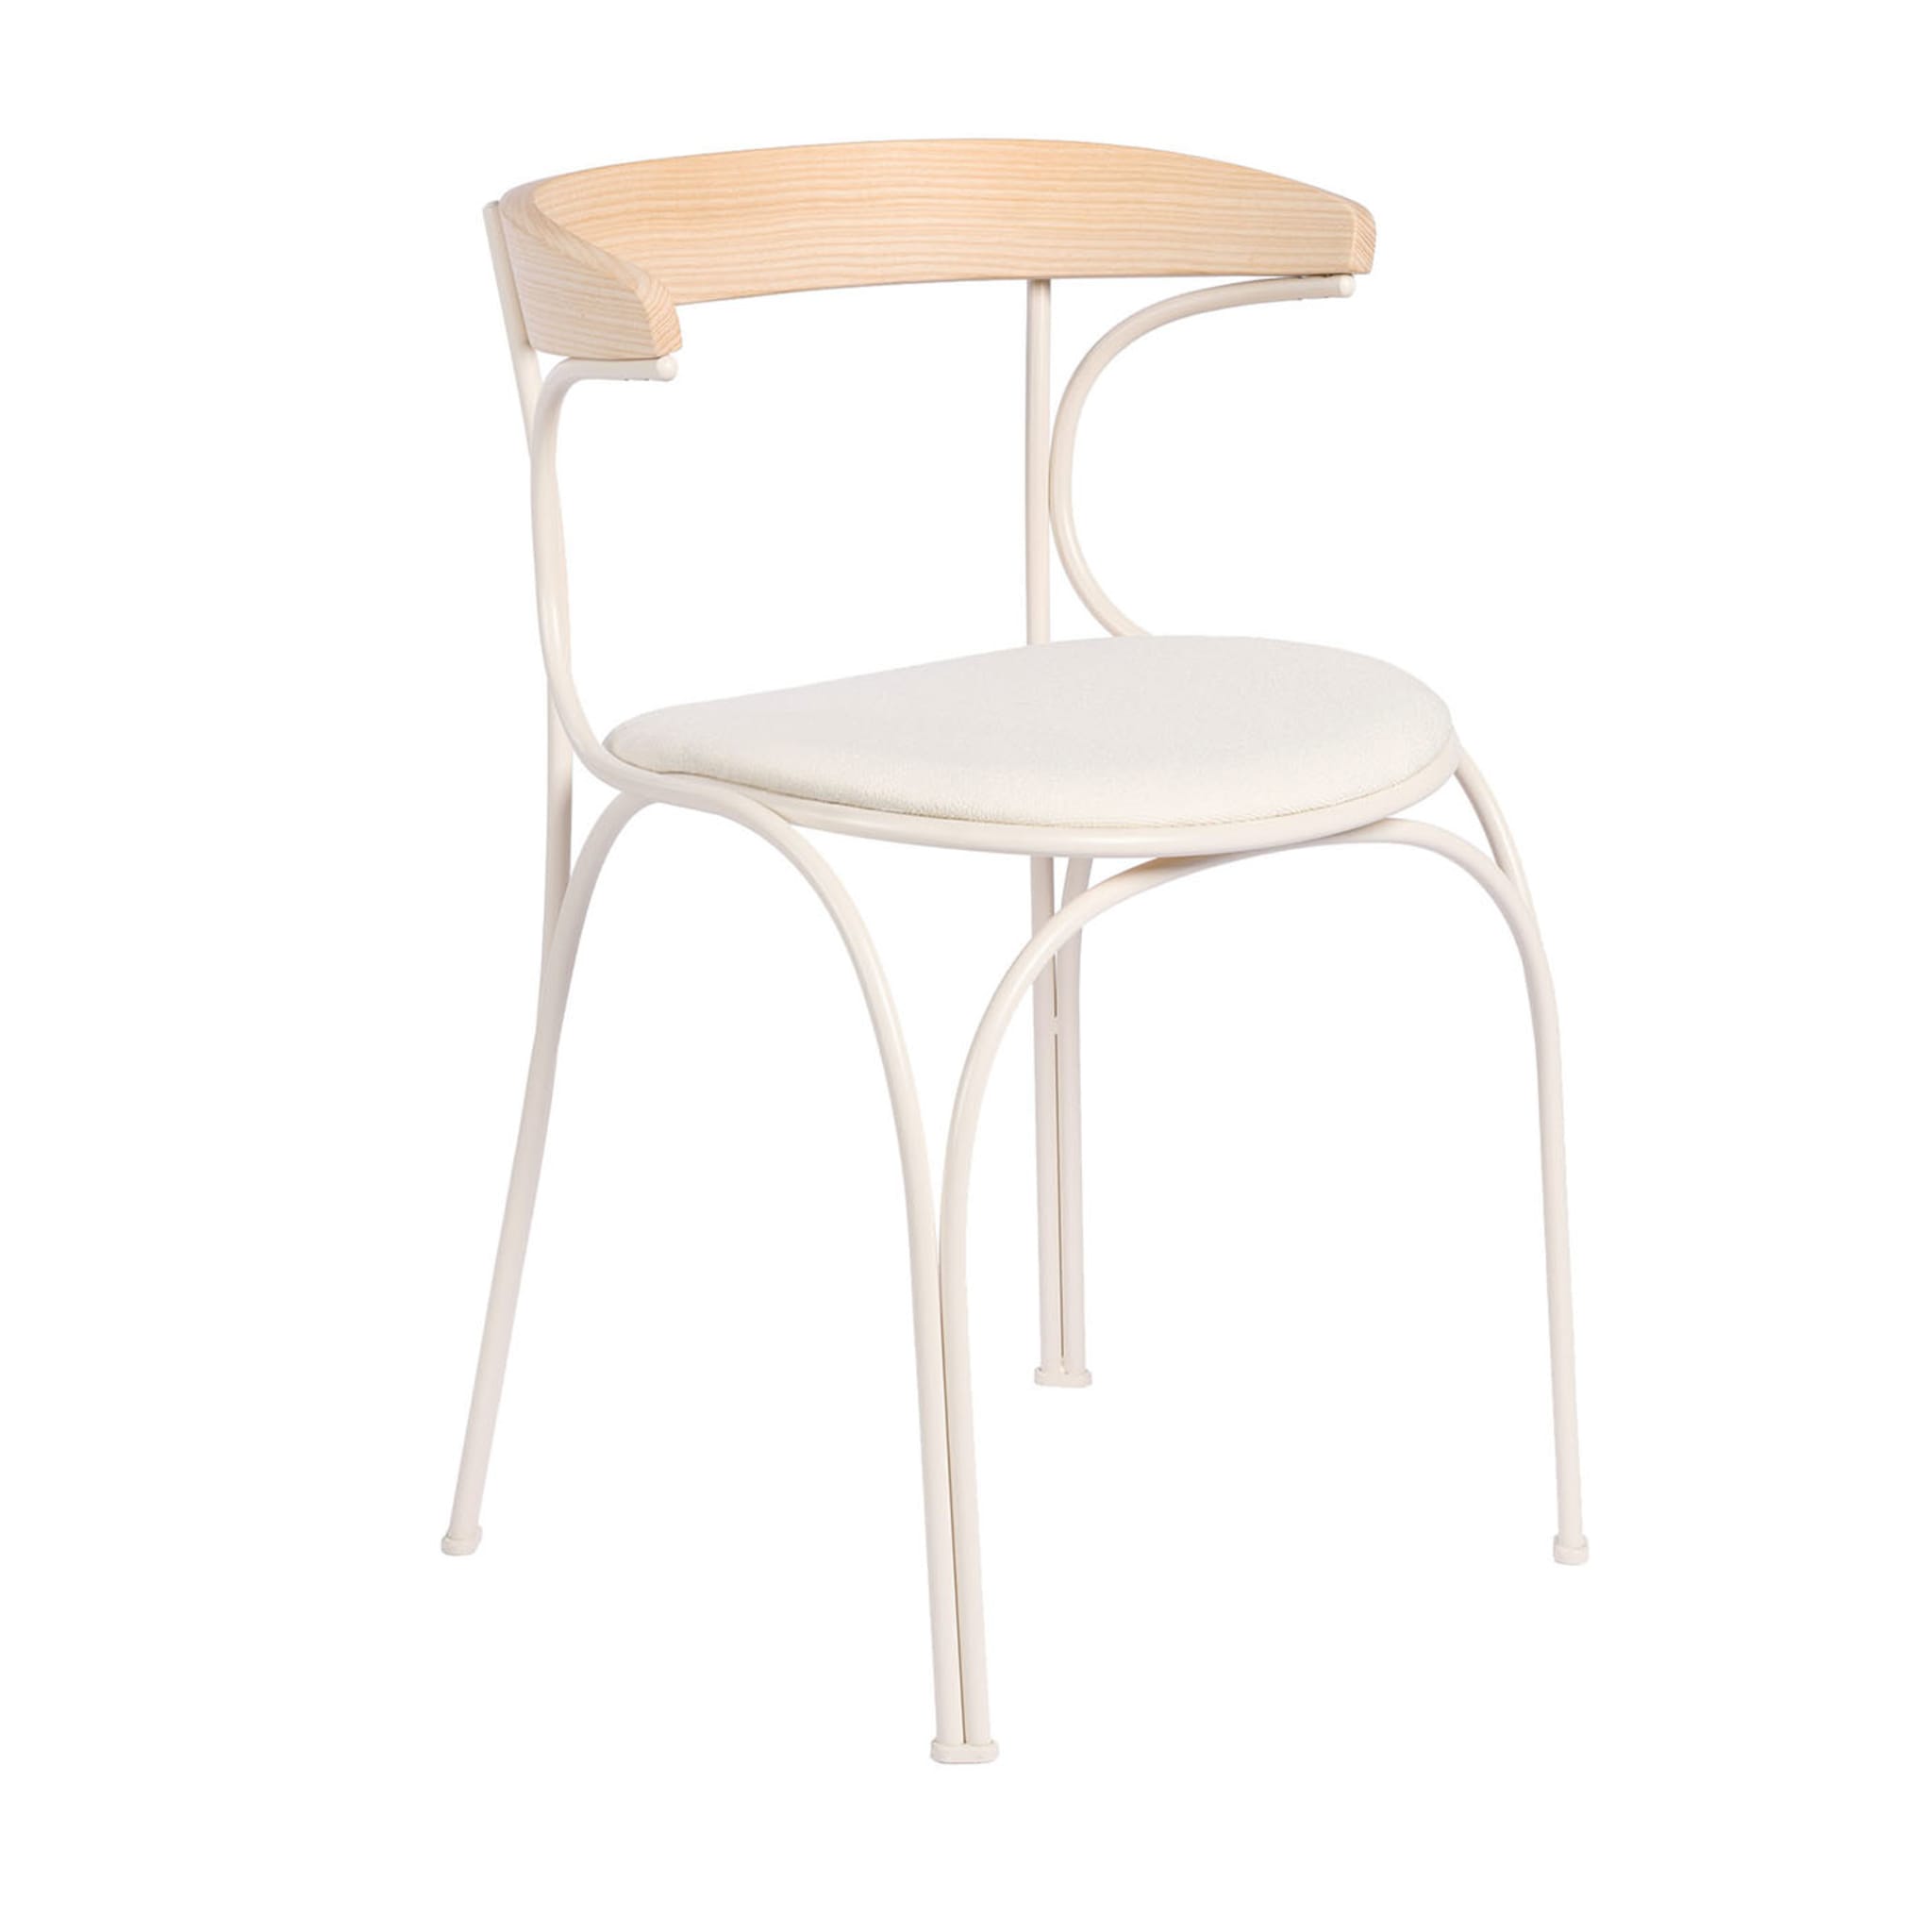 Ample White Chair by Nichetto Studio - Main view